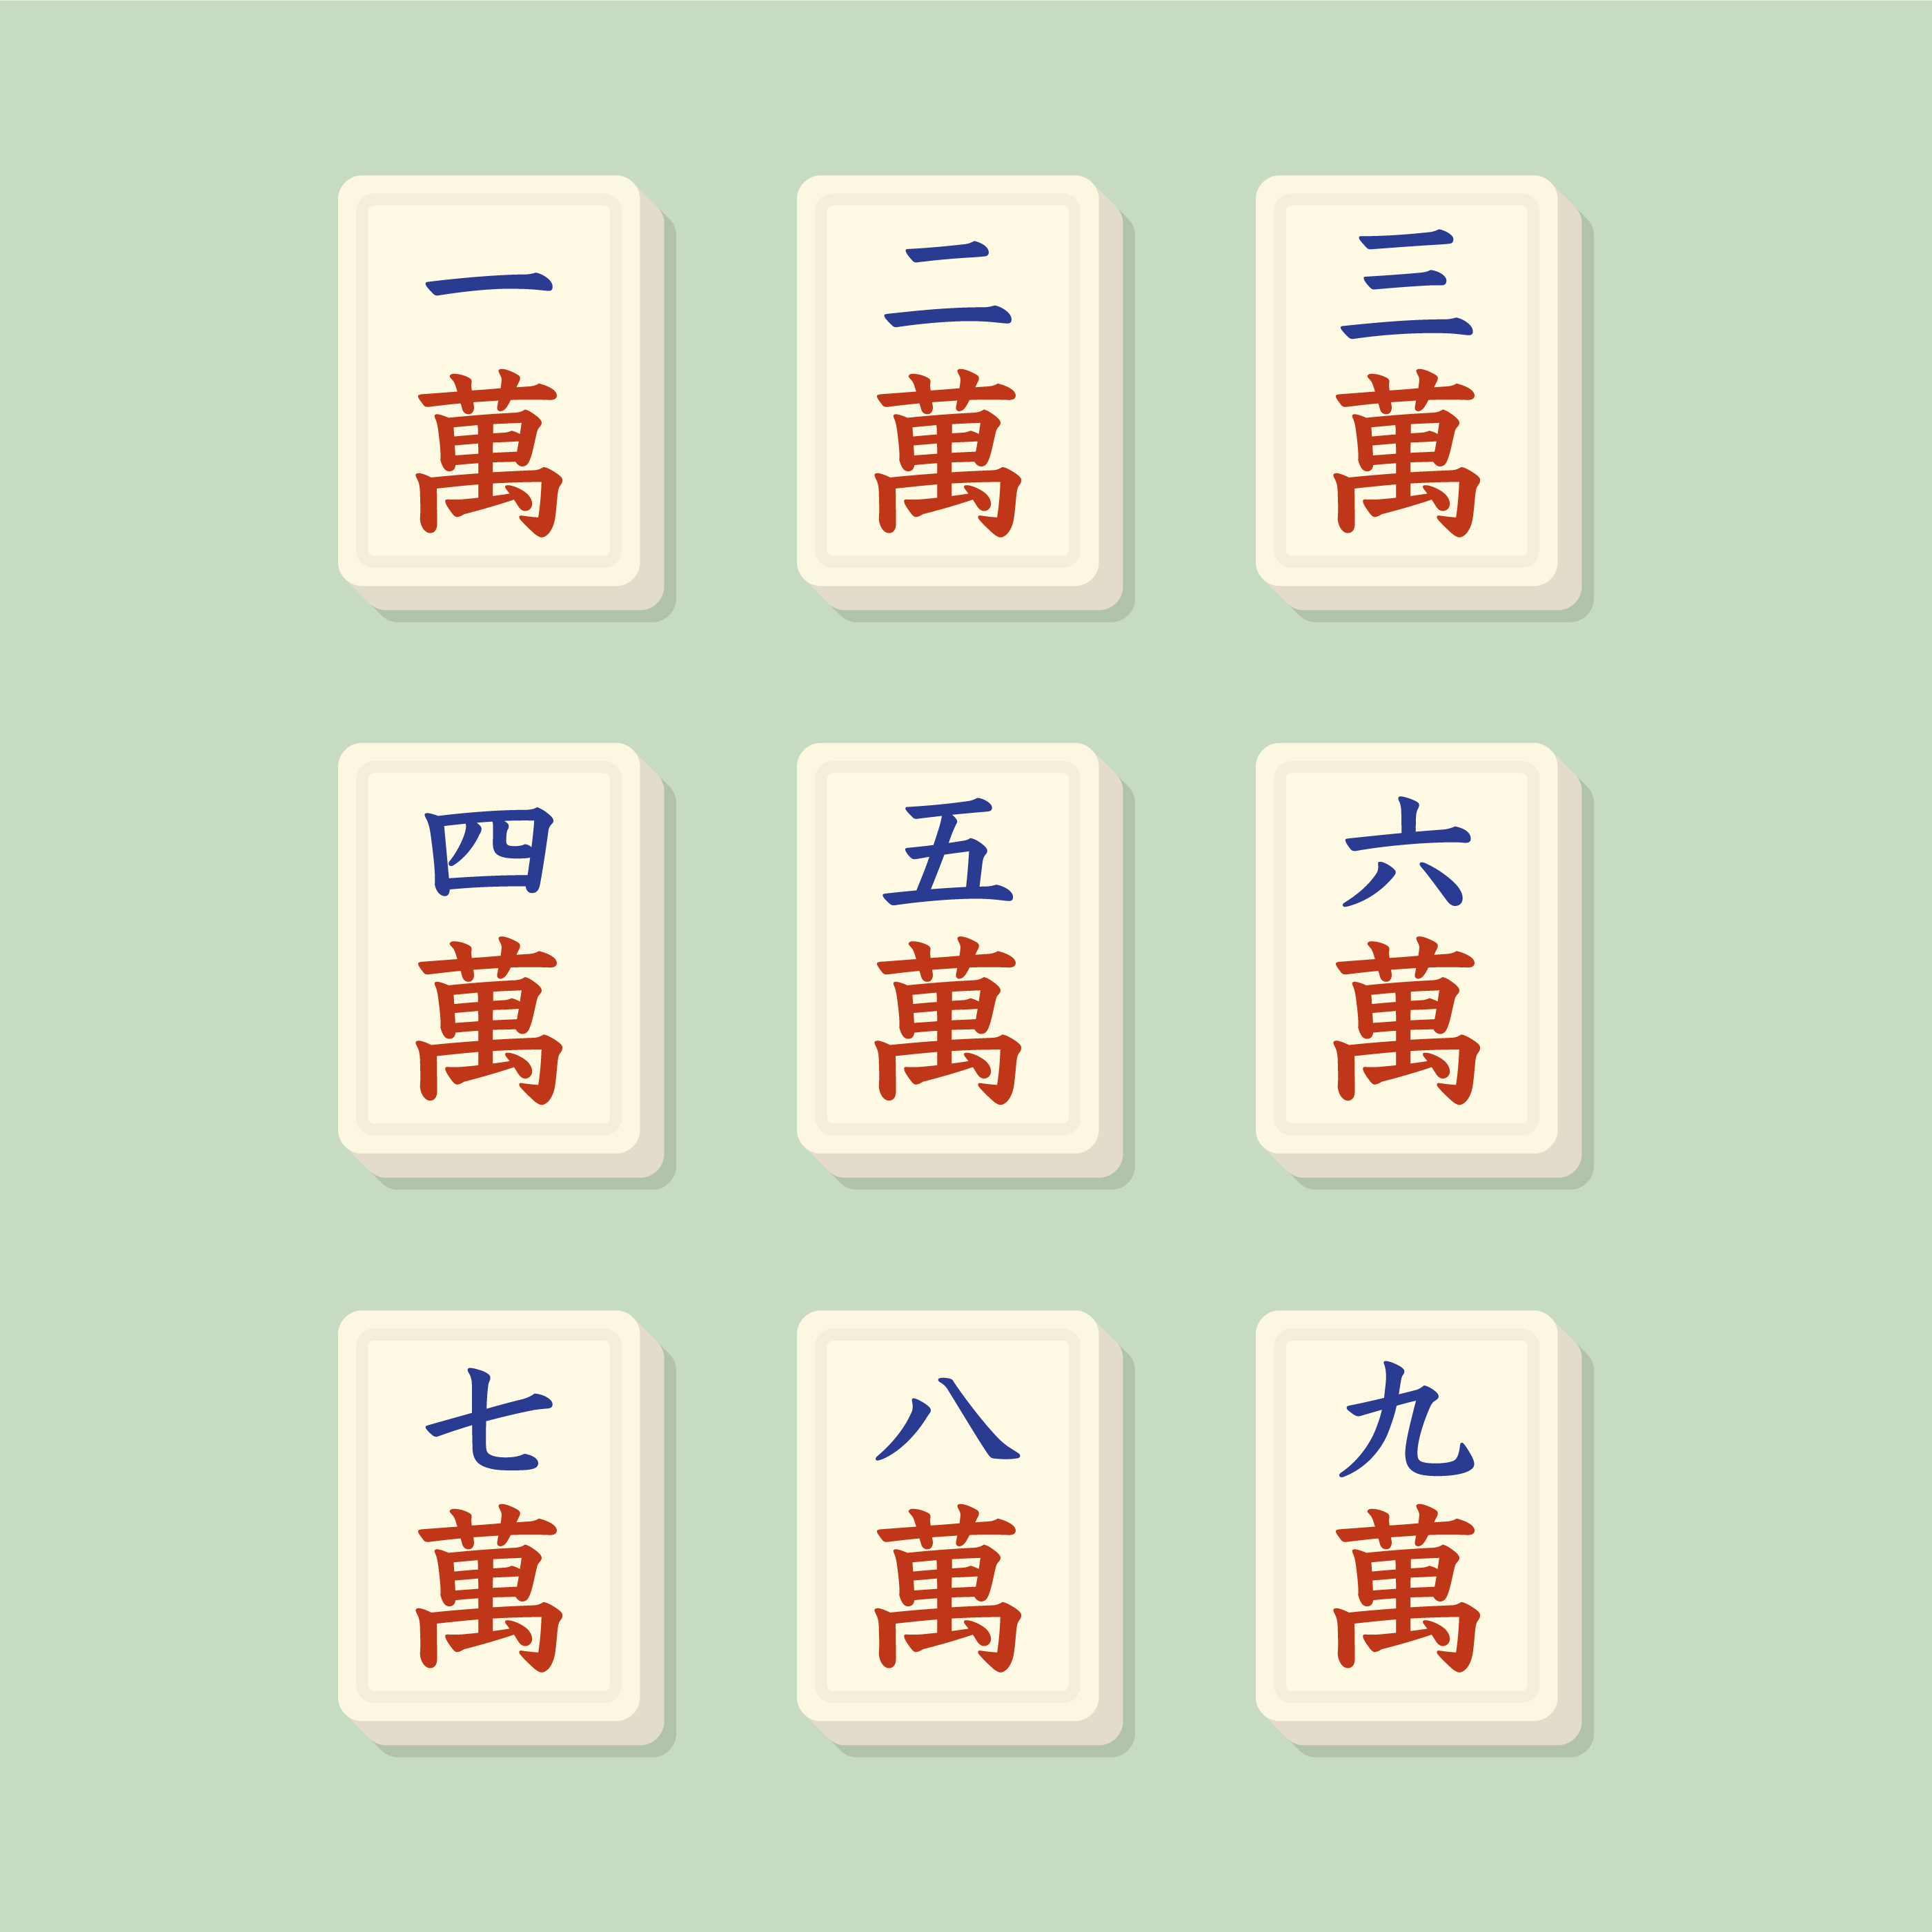 mahjong-suits-character-tiles-1928470-vector-art-at-vecteezy